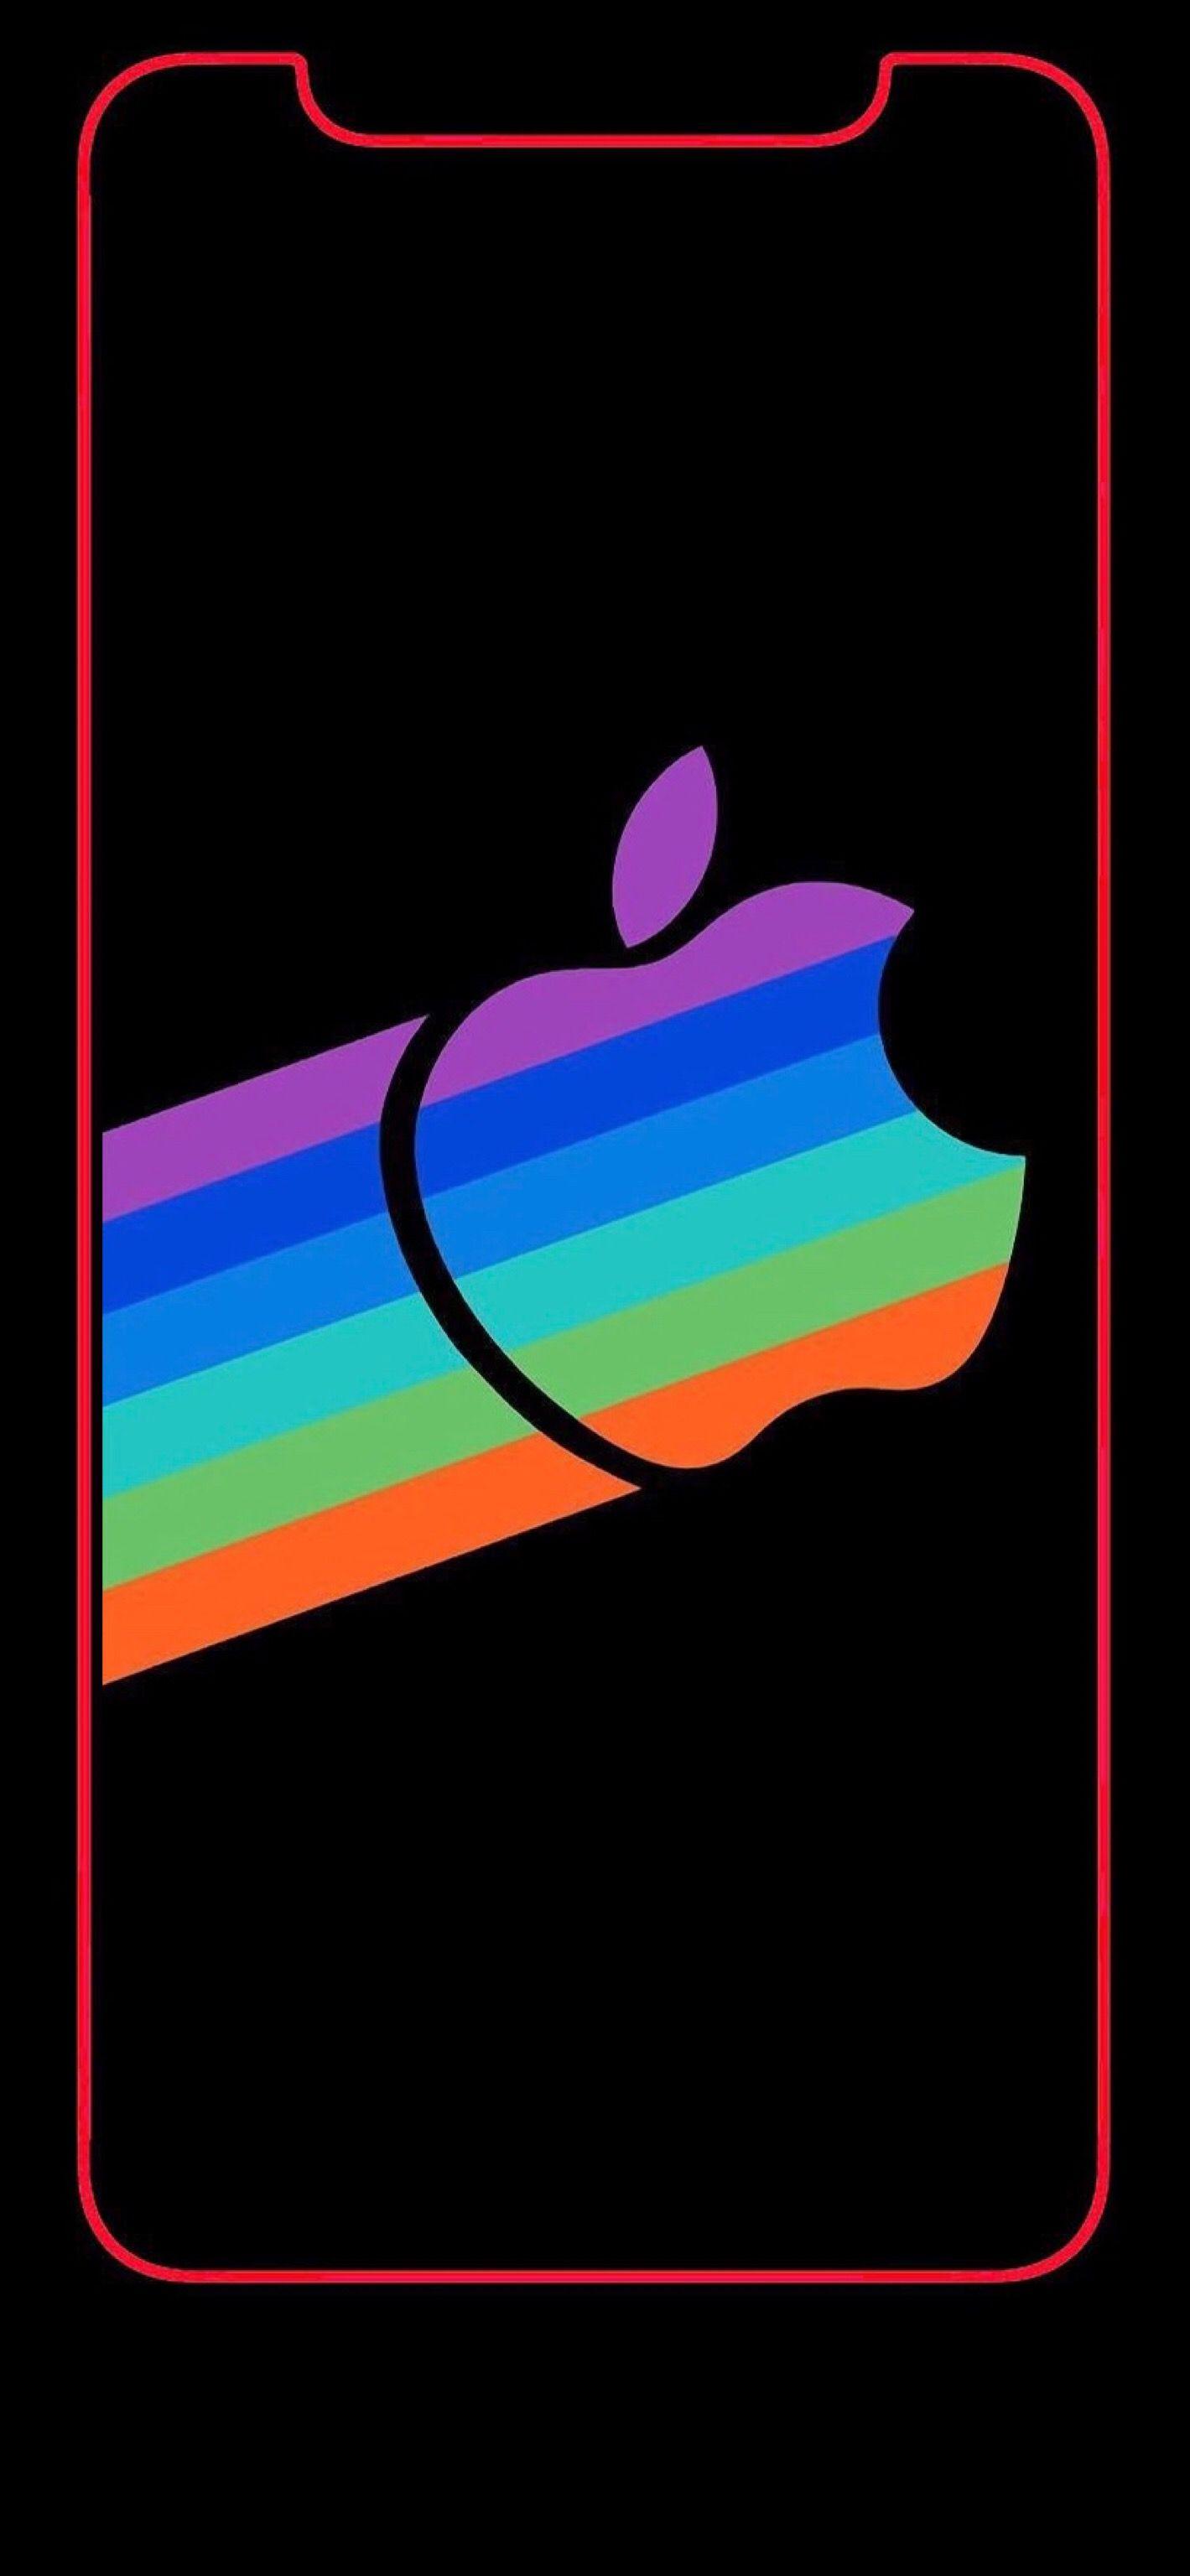 Wallpaper iPhone X logo rainbow 1. iPhone achtergrond, iPhone, Achtergrond